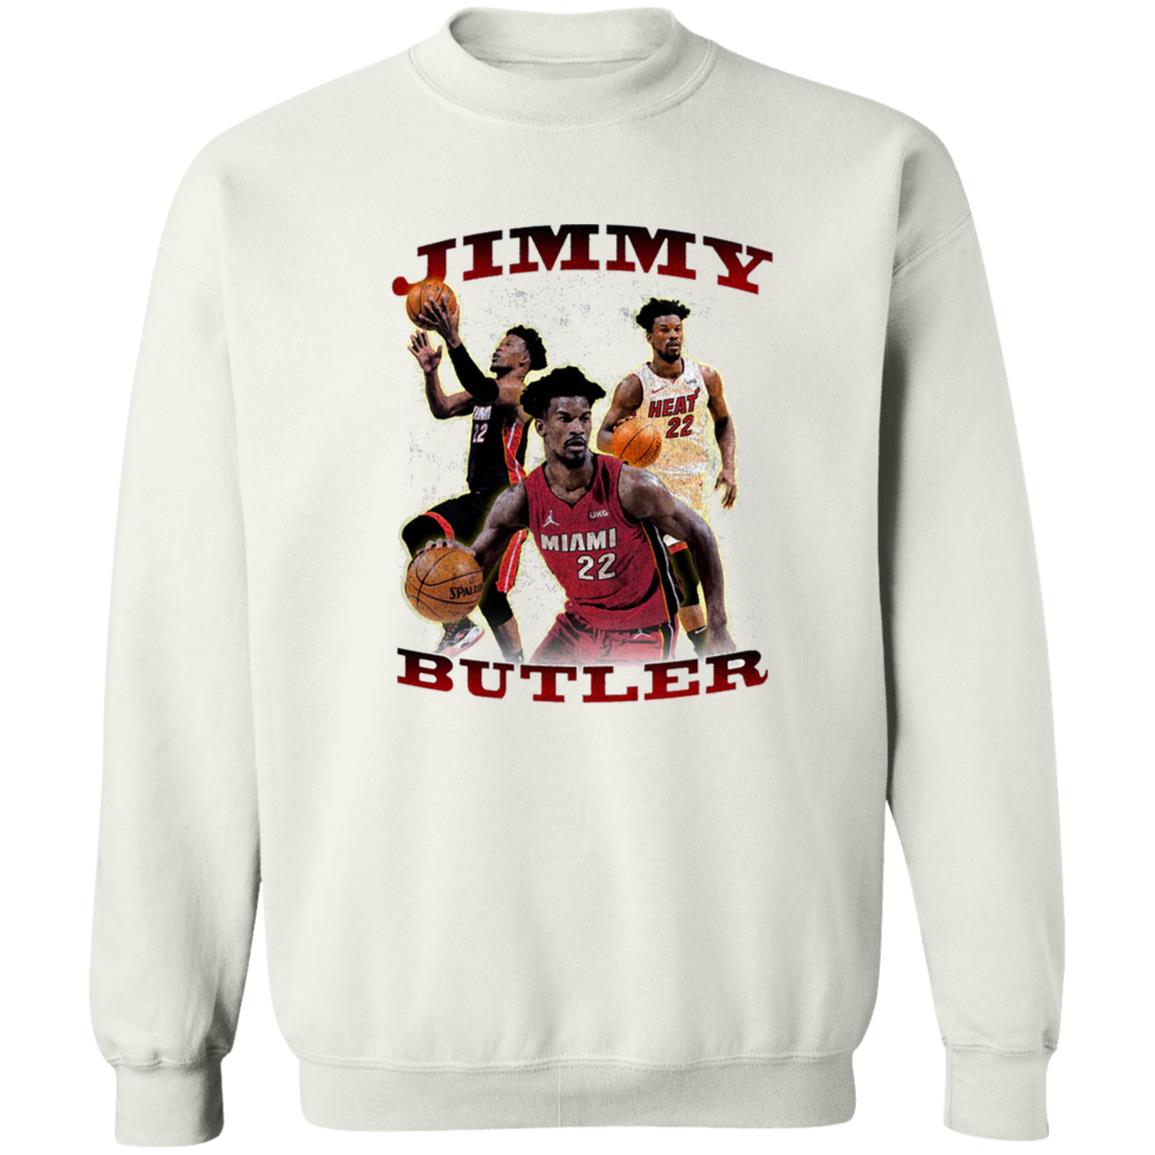 JIMMY VINTAGE SHIRT Jimmy Butler, Miami Heat - Ellieshirt